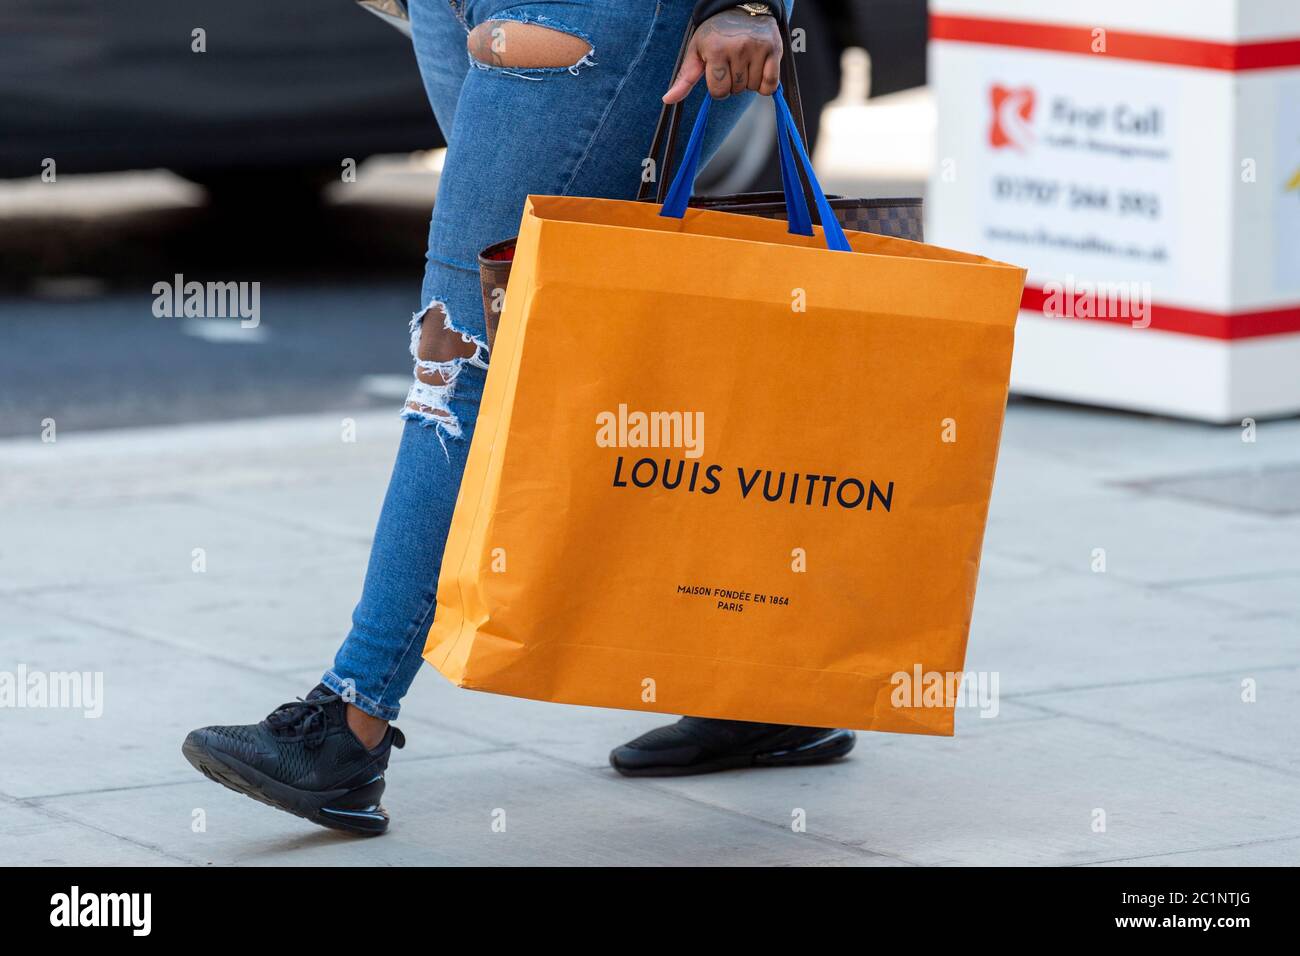 London, UK. 15th June, 2020. A shopper carries Louis Vuitton shopping bag on Oxford